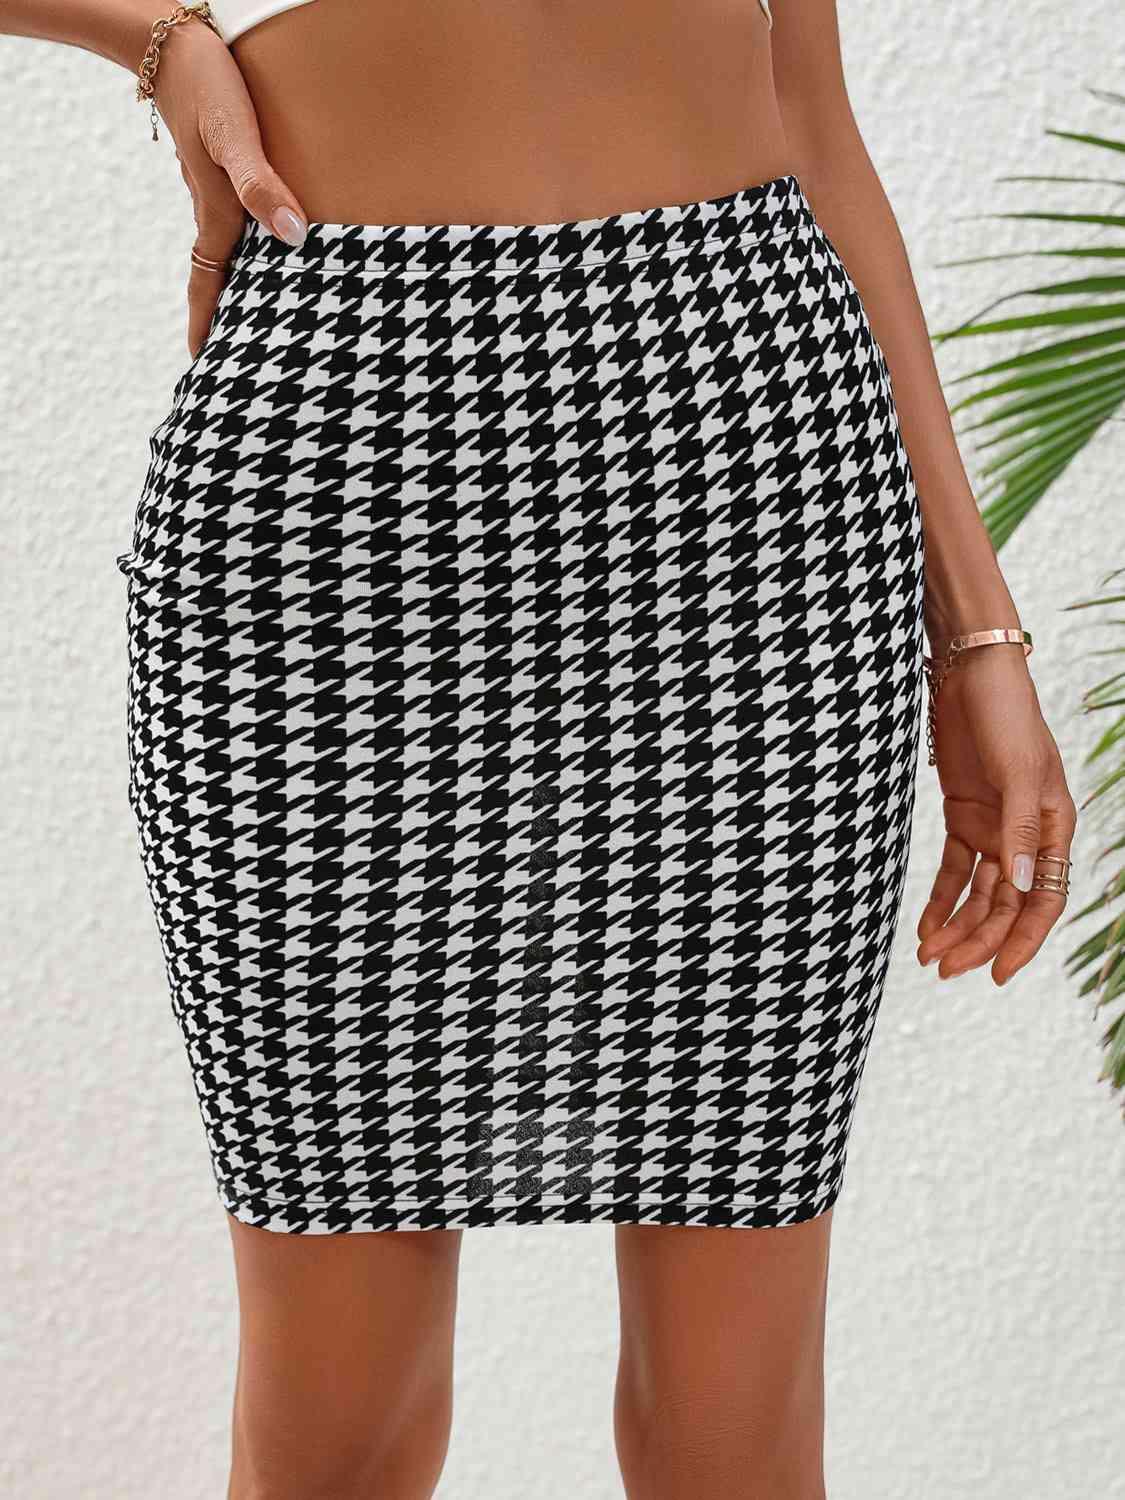 Classic Style High Waist Houndstooth Mini Skirt - MXSTUDIO.COM